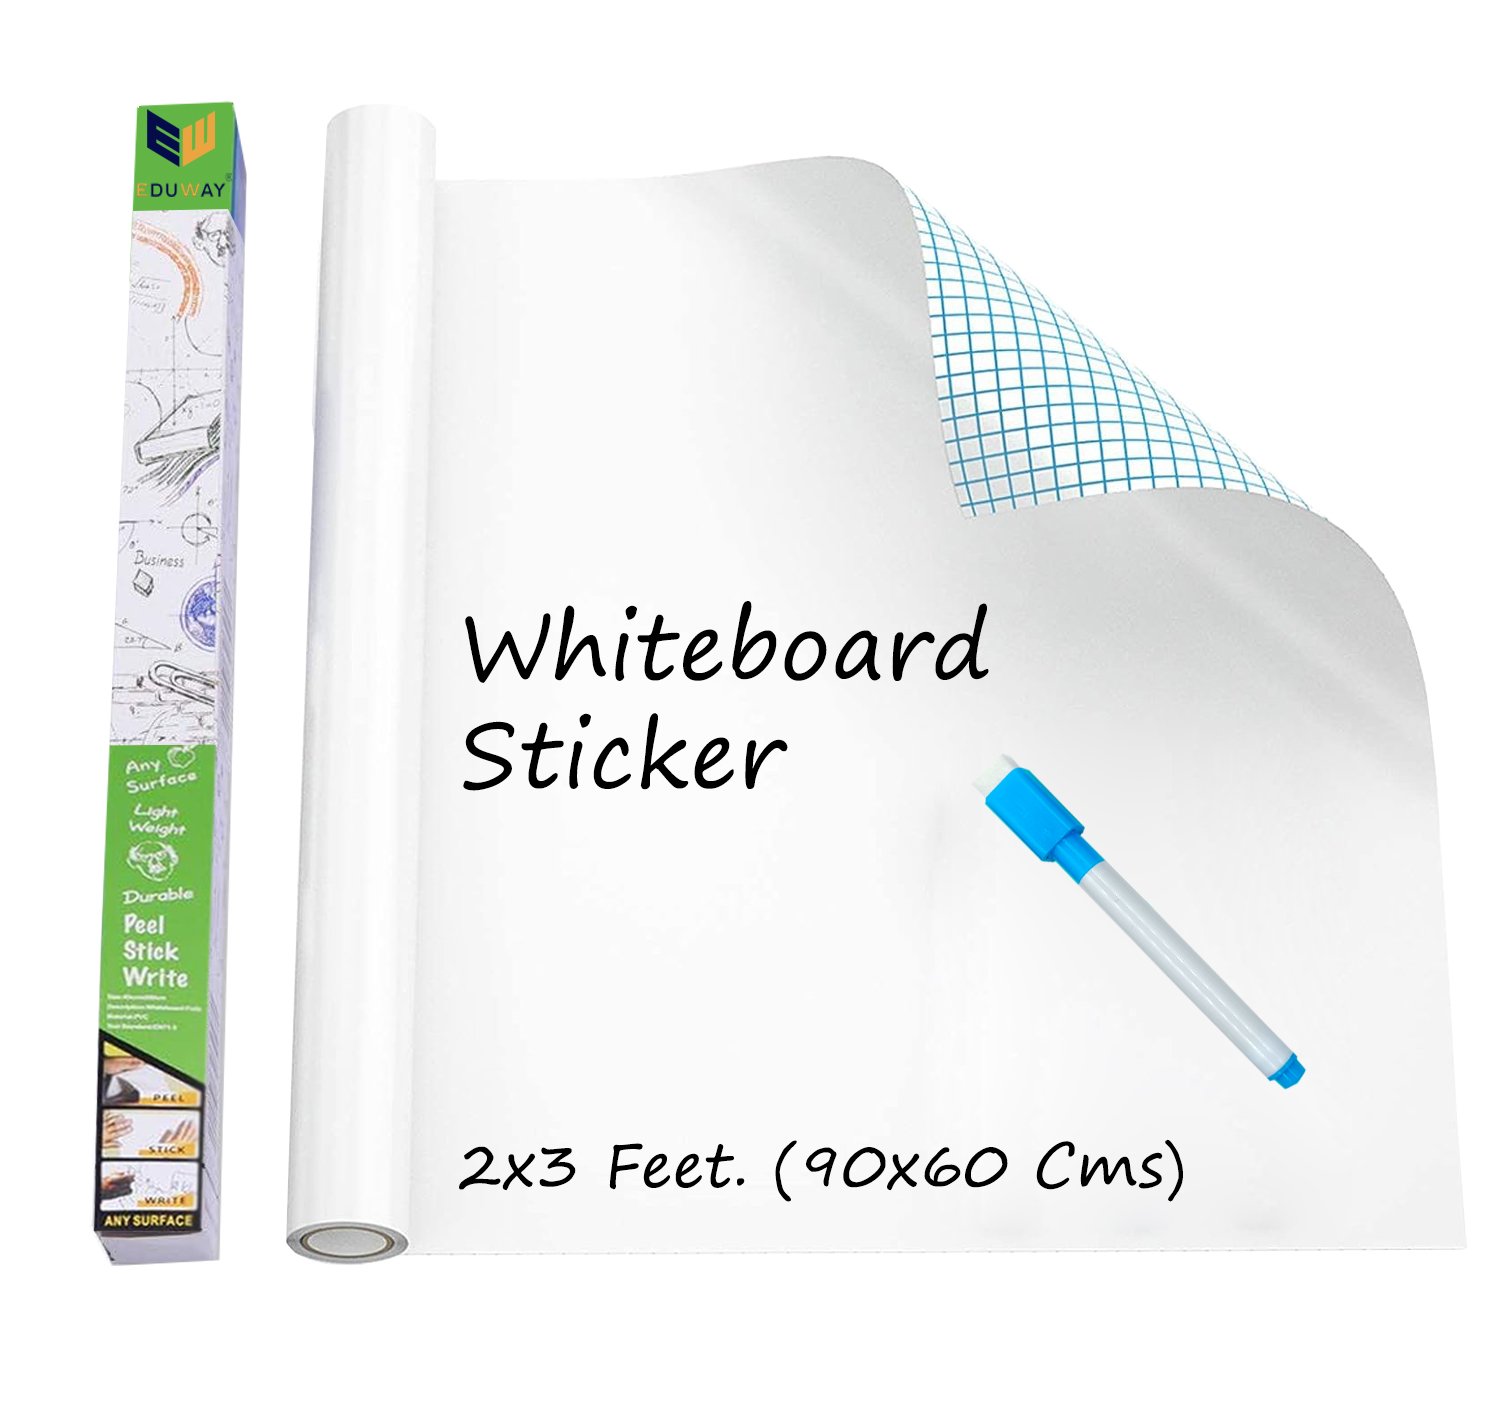 vinyl white board with marker 2x3 Feet.